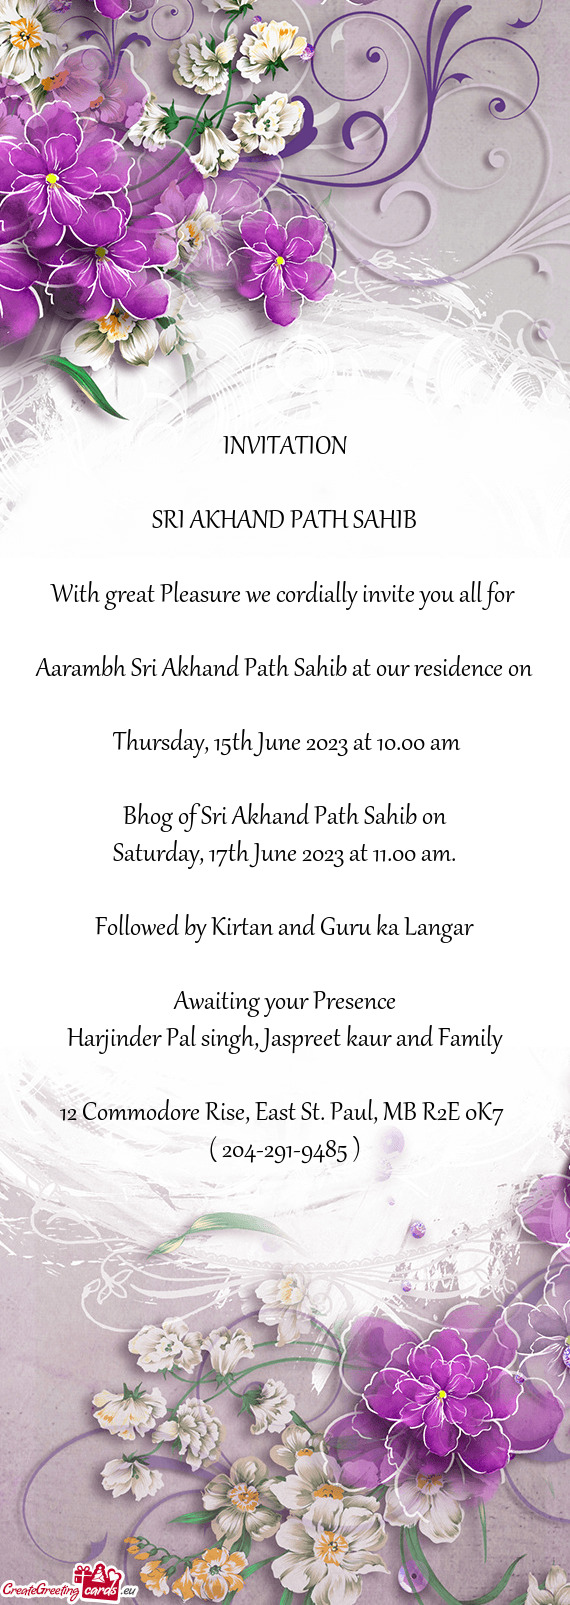 Aarambh Sri Akhand Path Sahib at our residence on Thursday, 15th June 2023 at 10.00 am